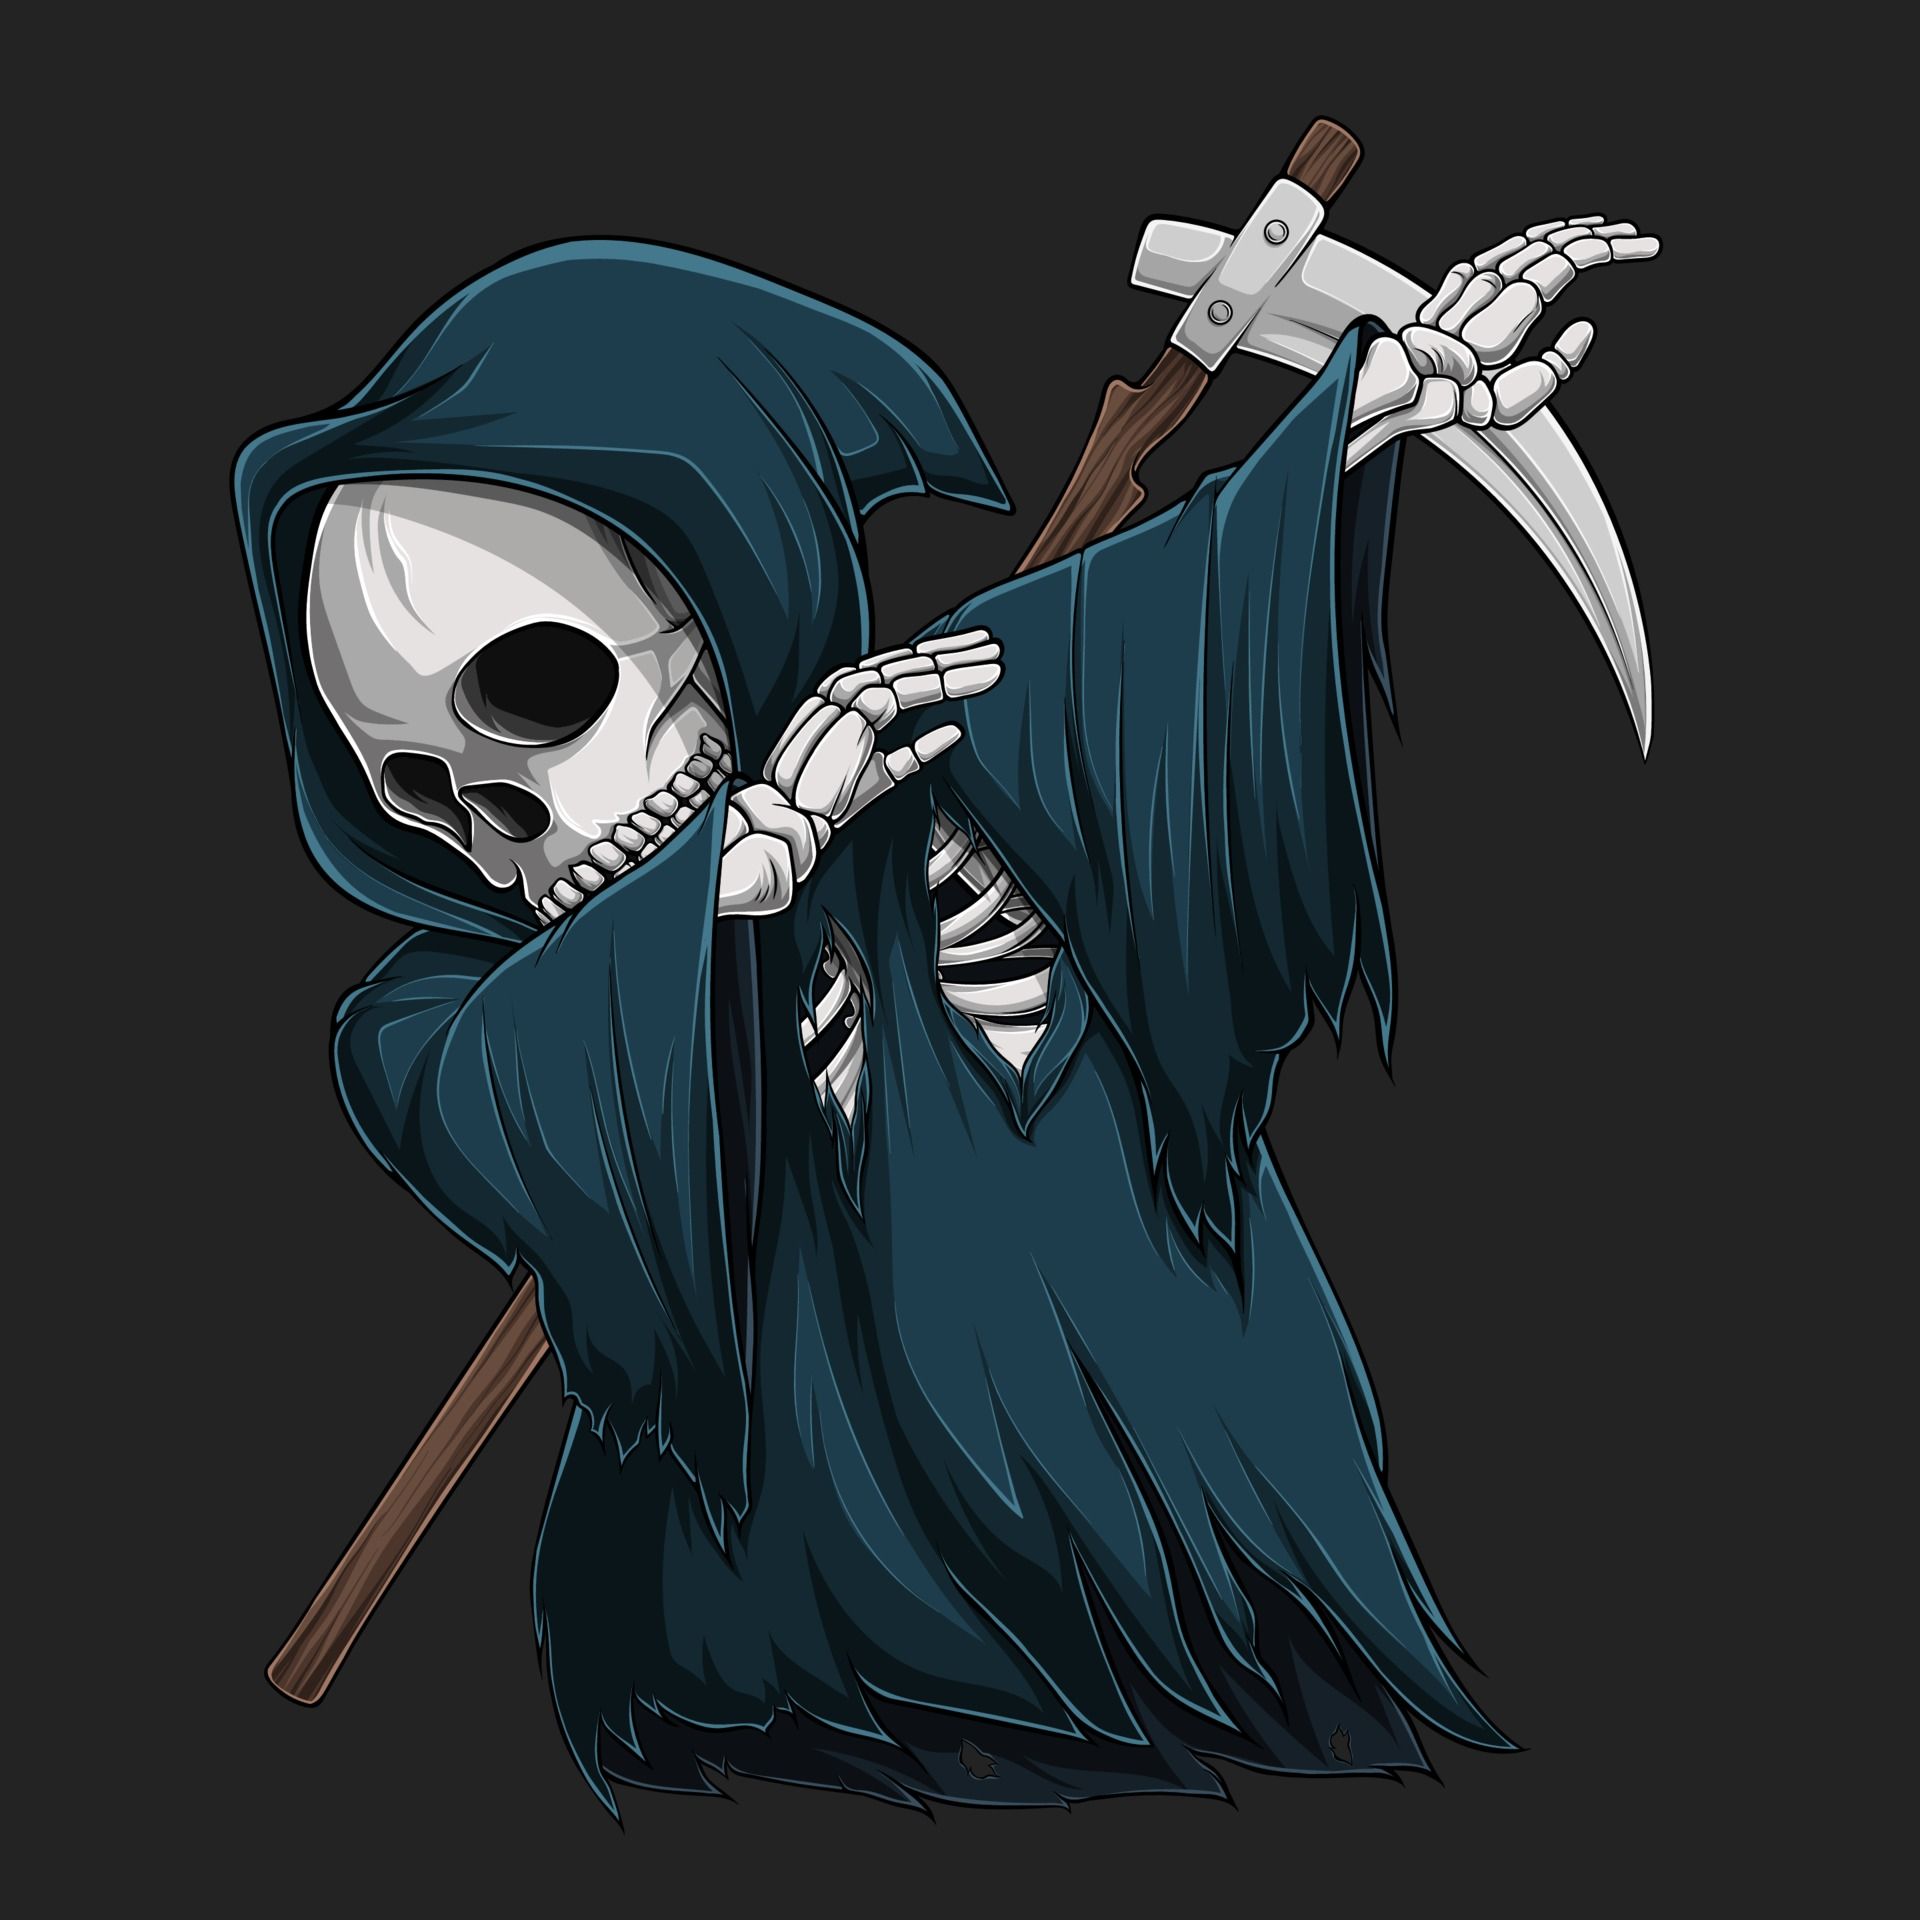 A skeleton in a black hooded cloak, holding a scythe. - Dab dance